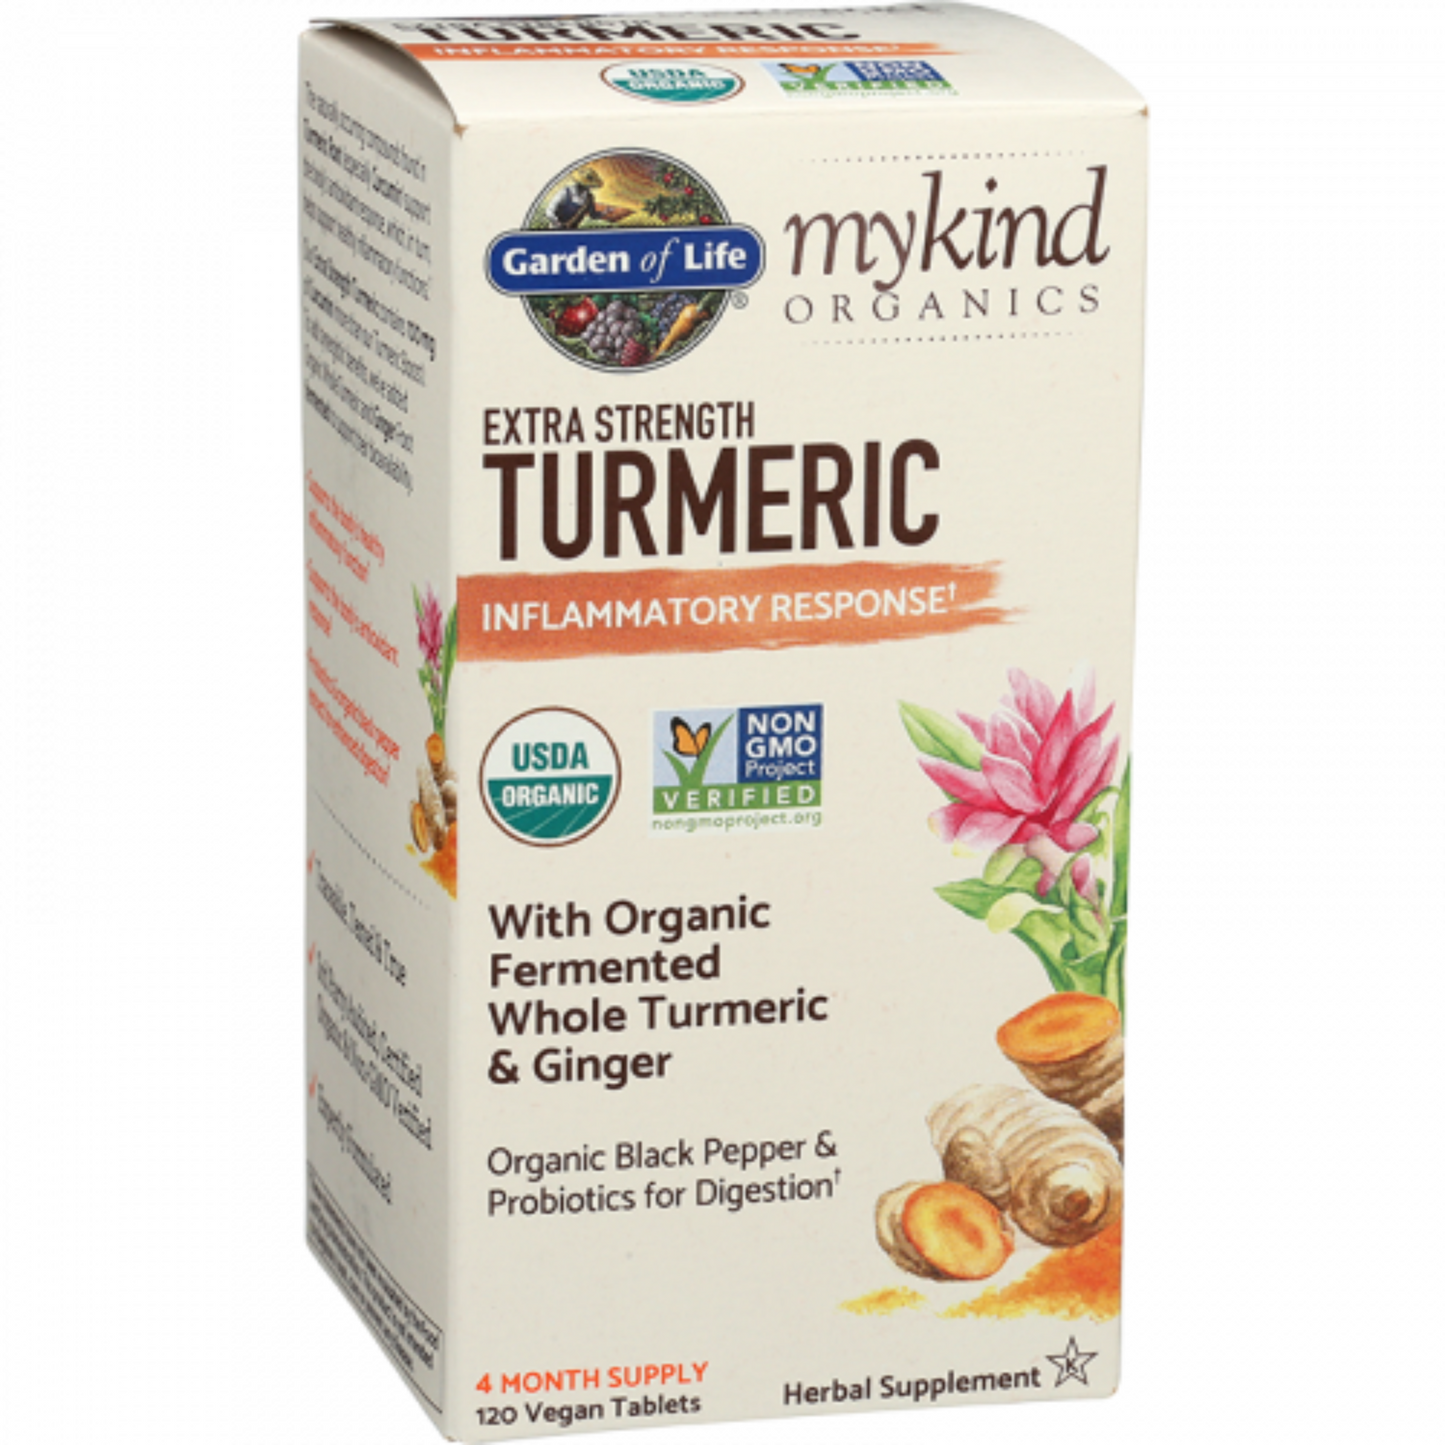 Primary Image of mykind Organics Turmeric Extra Strength